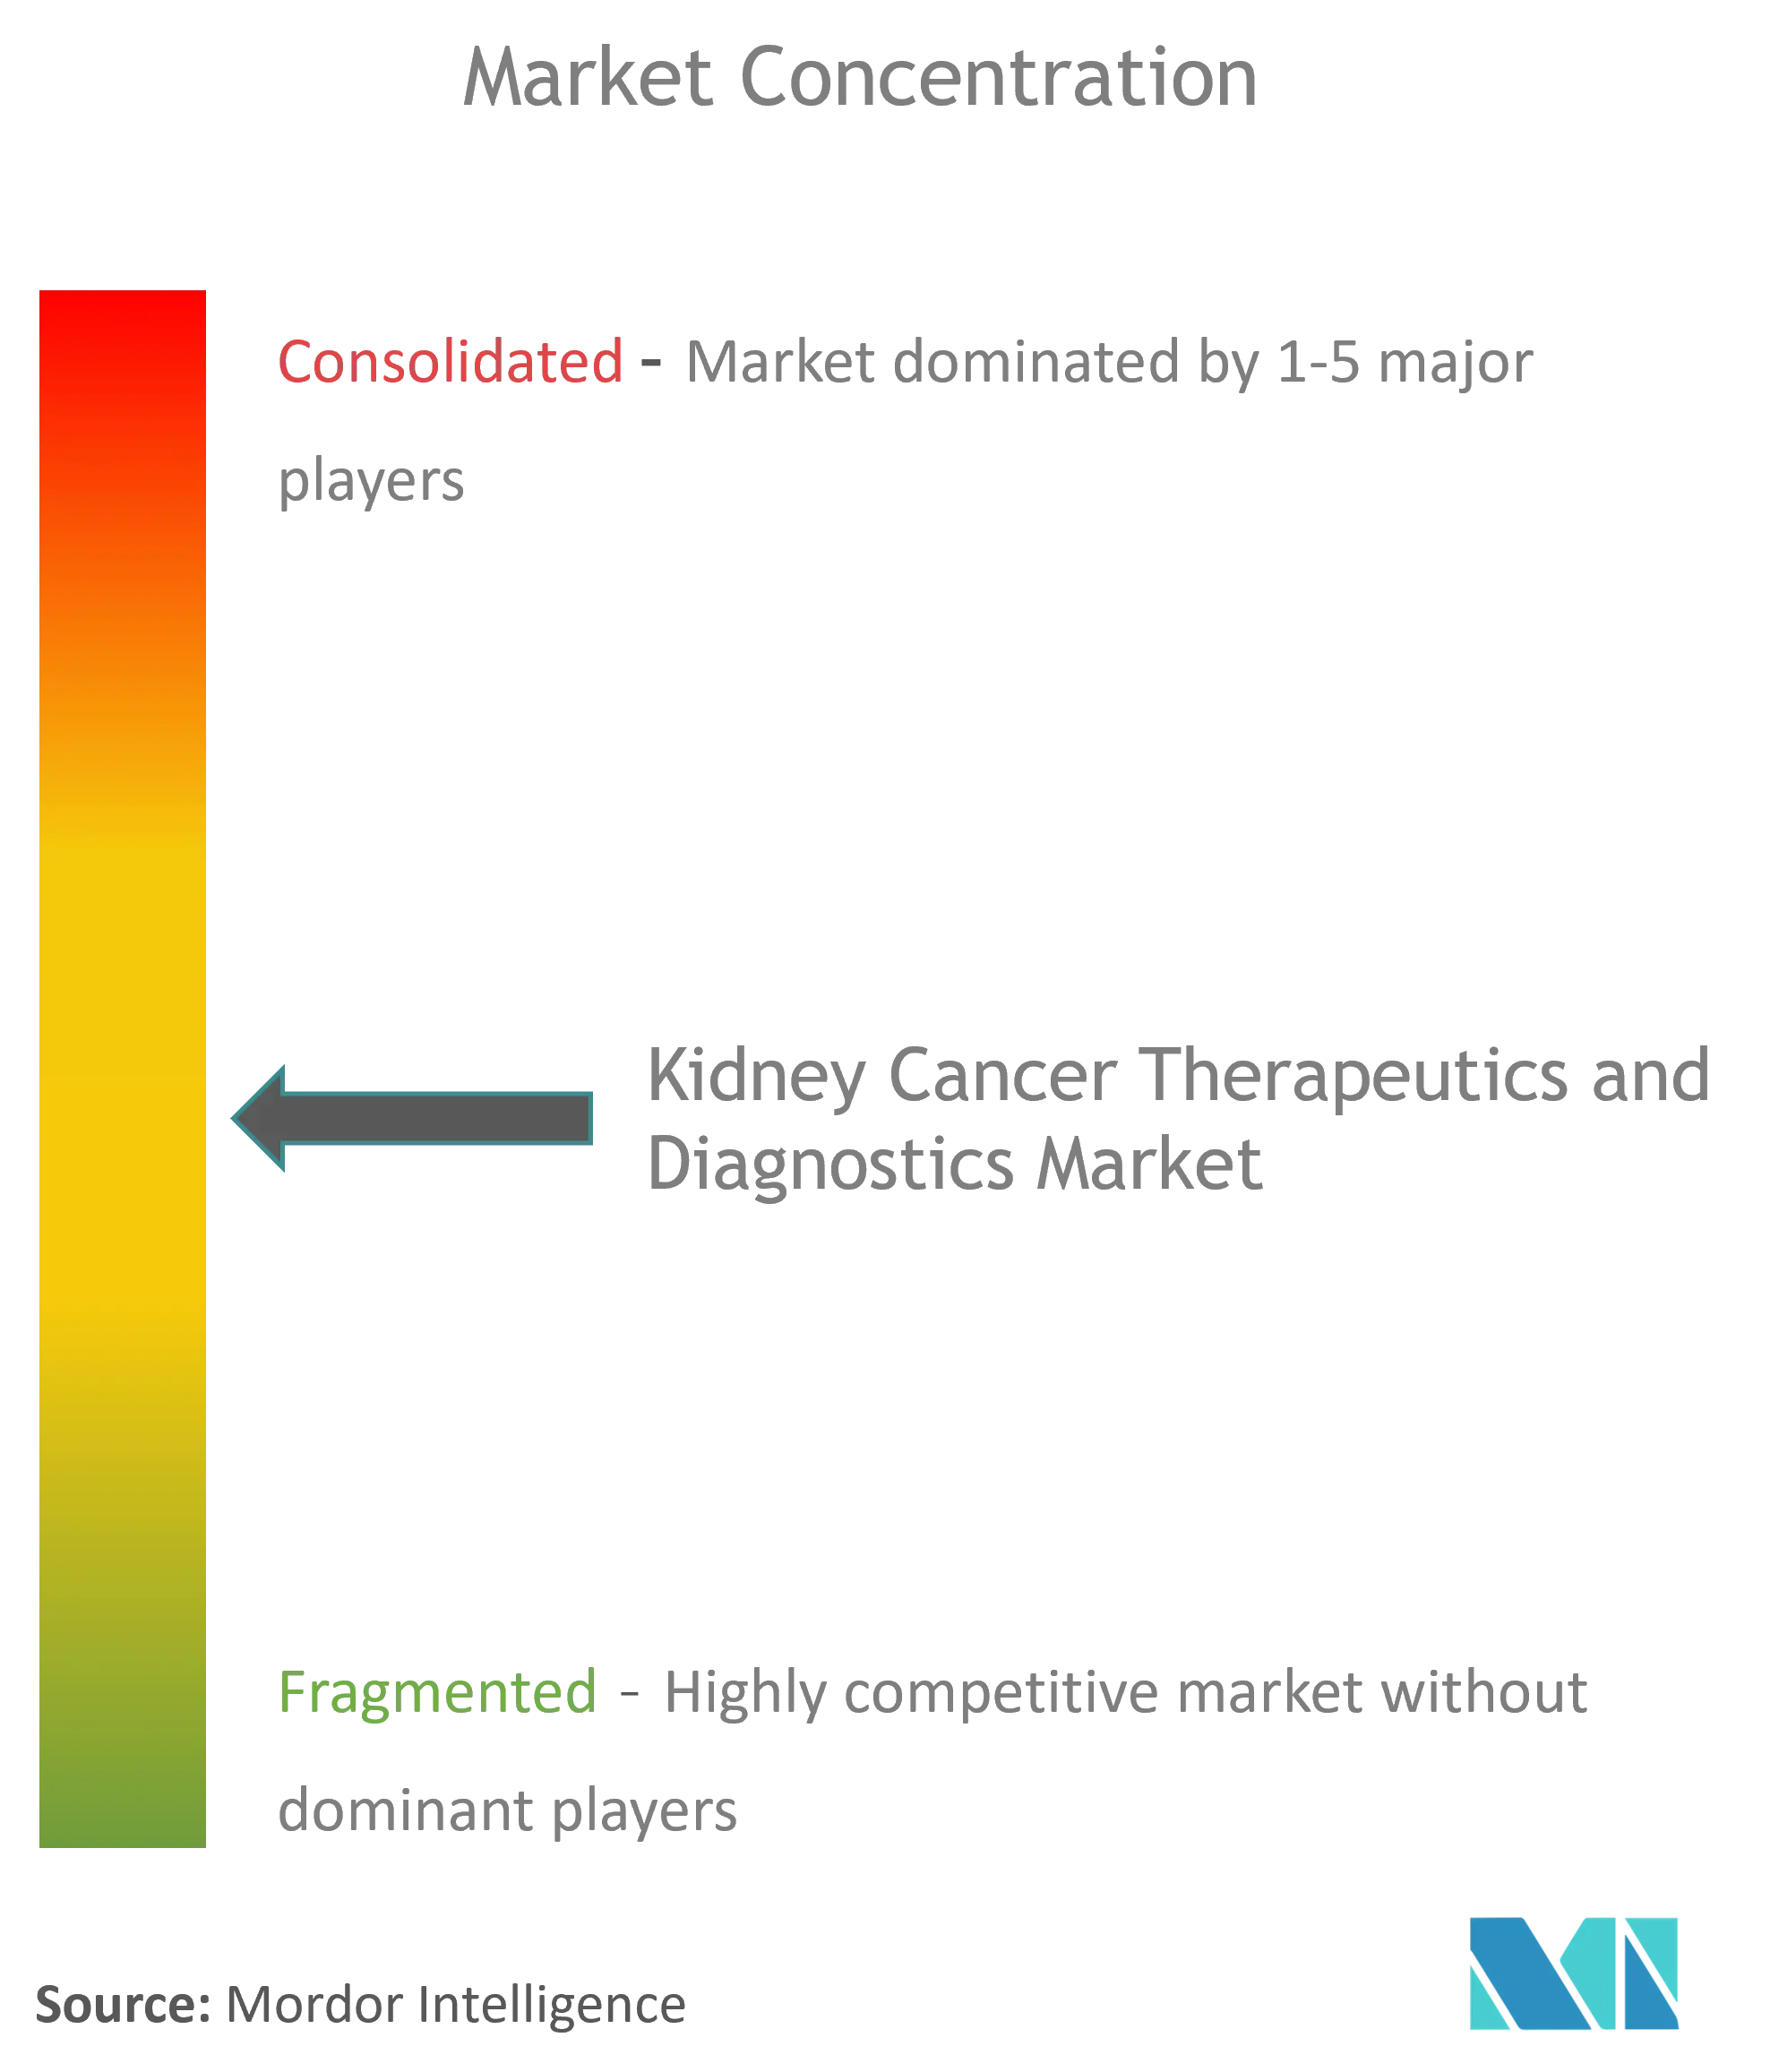 Kidney Cancer Therapeutics Diagnostics Market Concentration